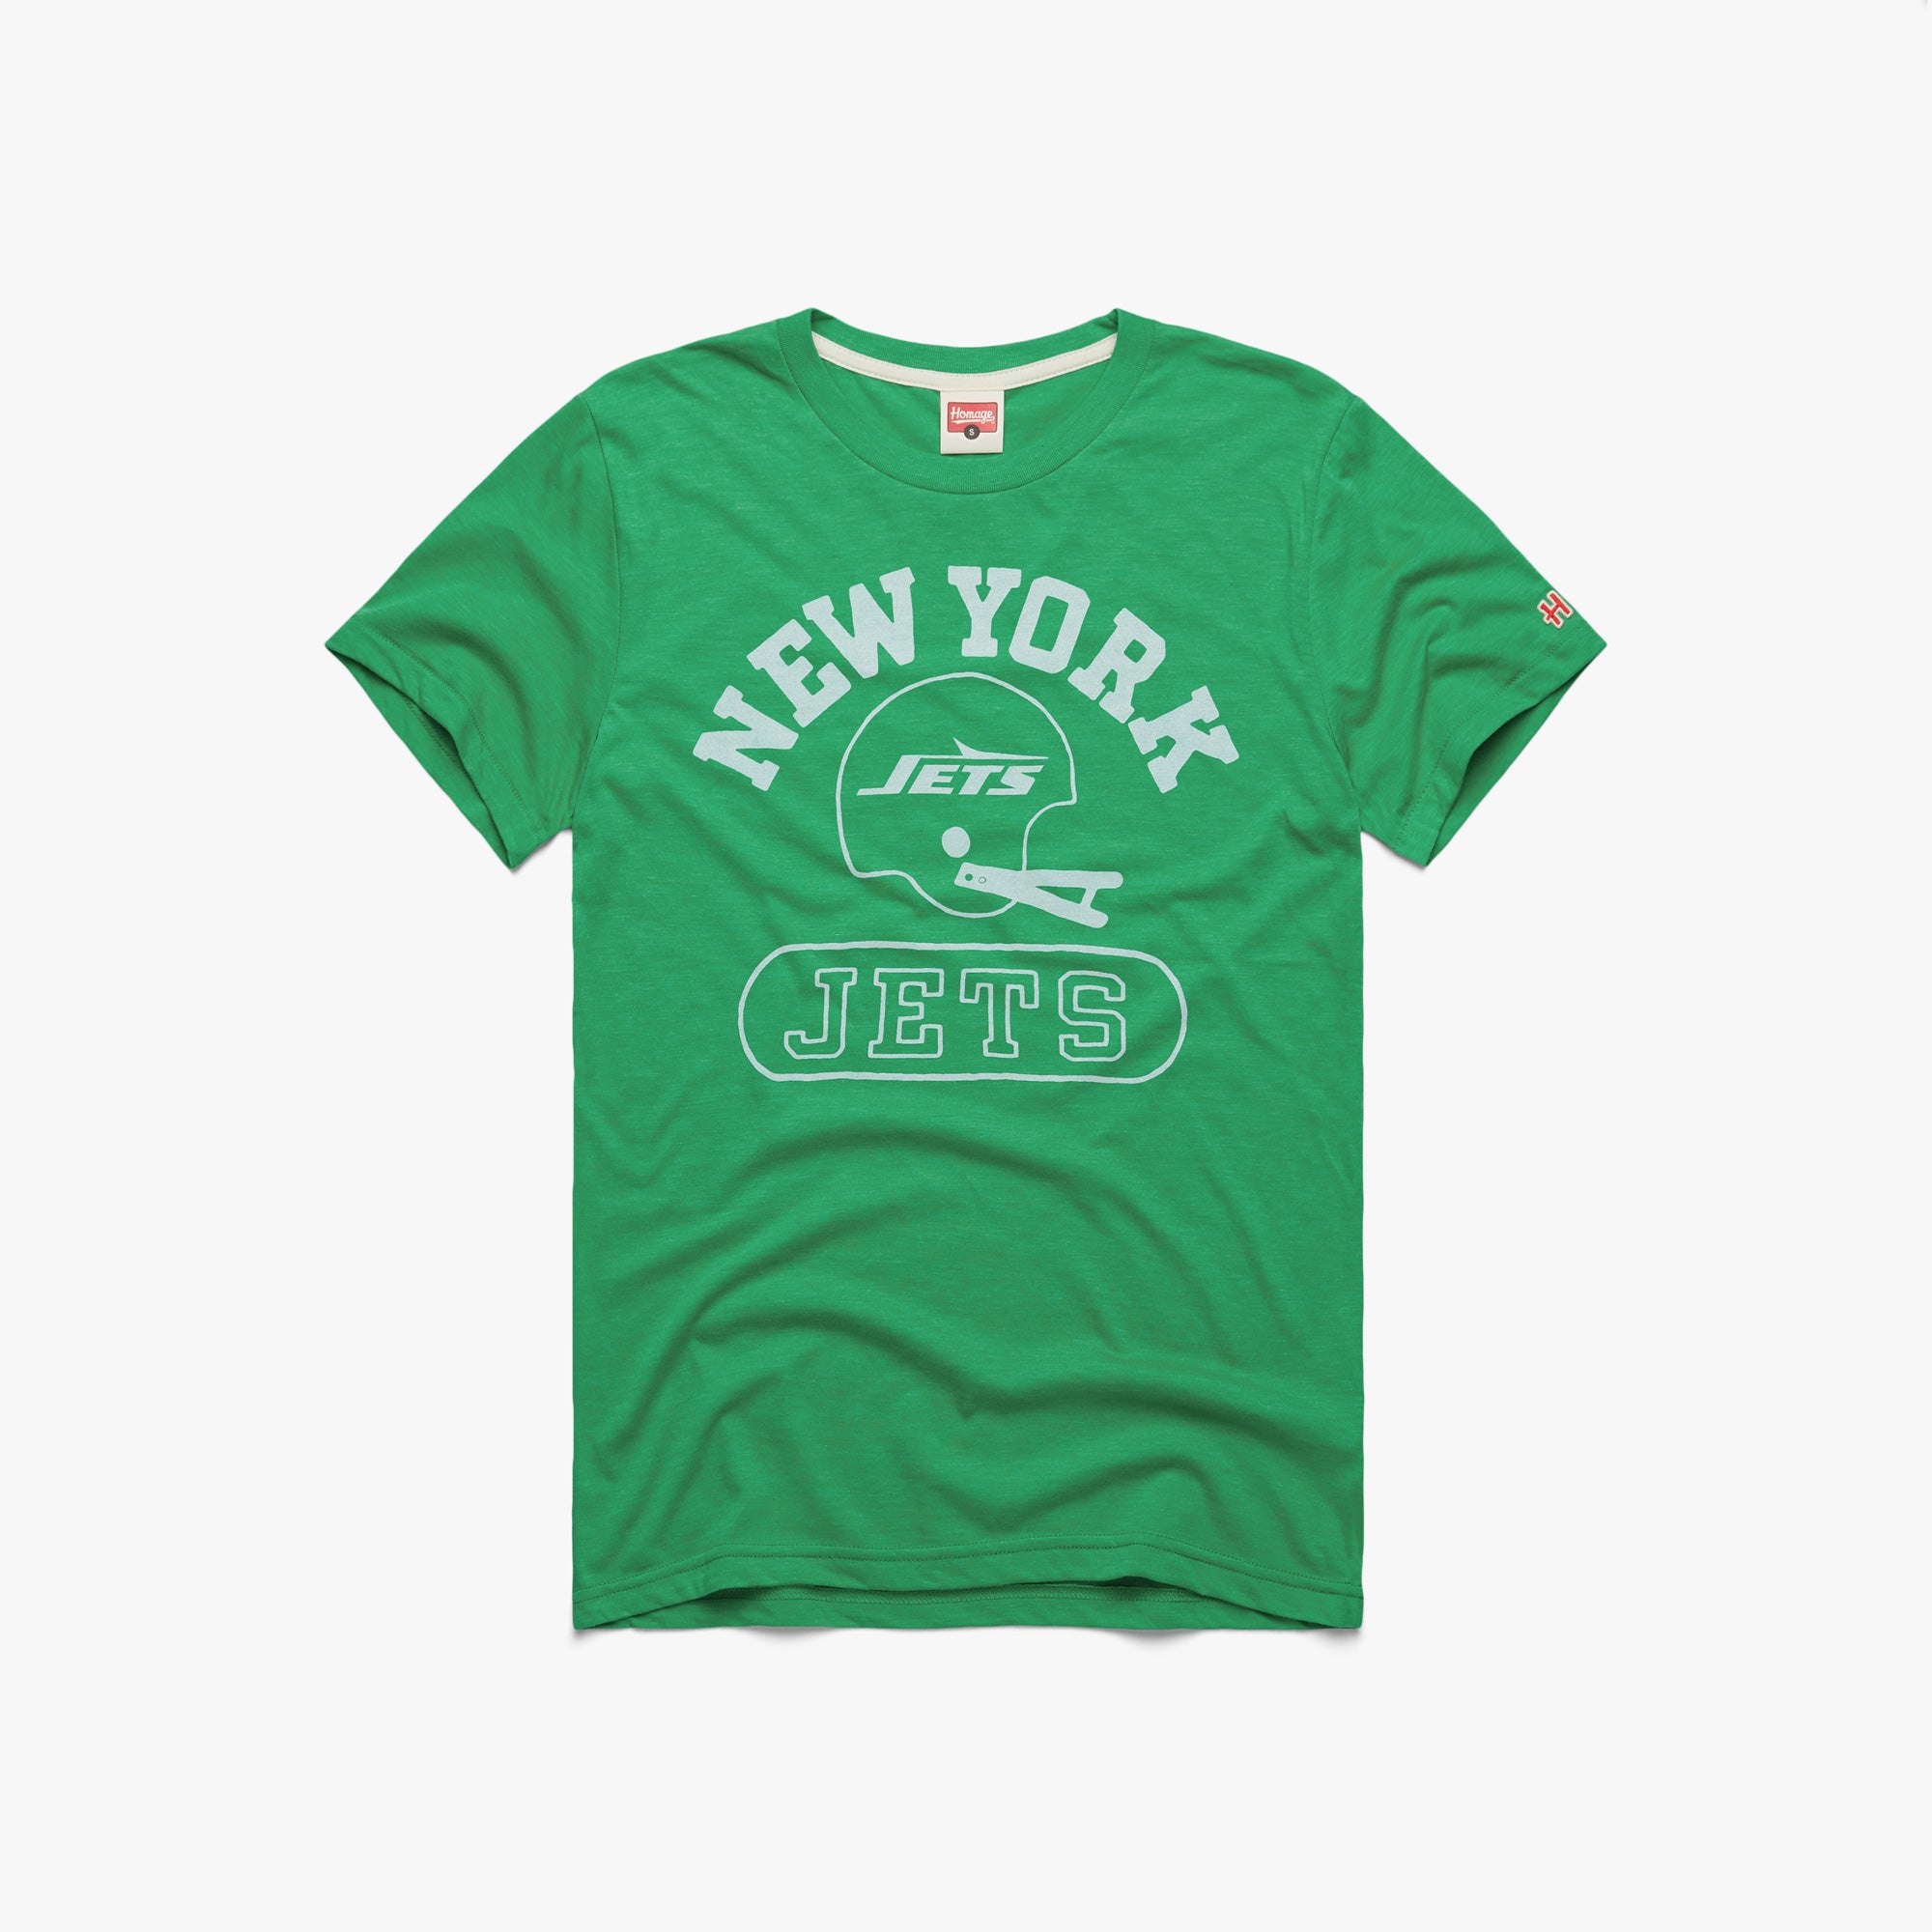 New York Jets Throwback Jersey, Vintage Jersey, Retro Jersey